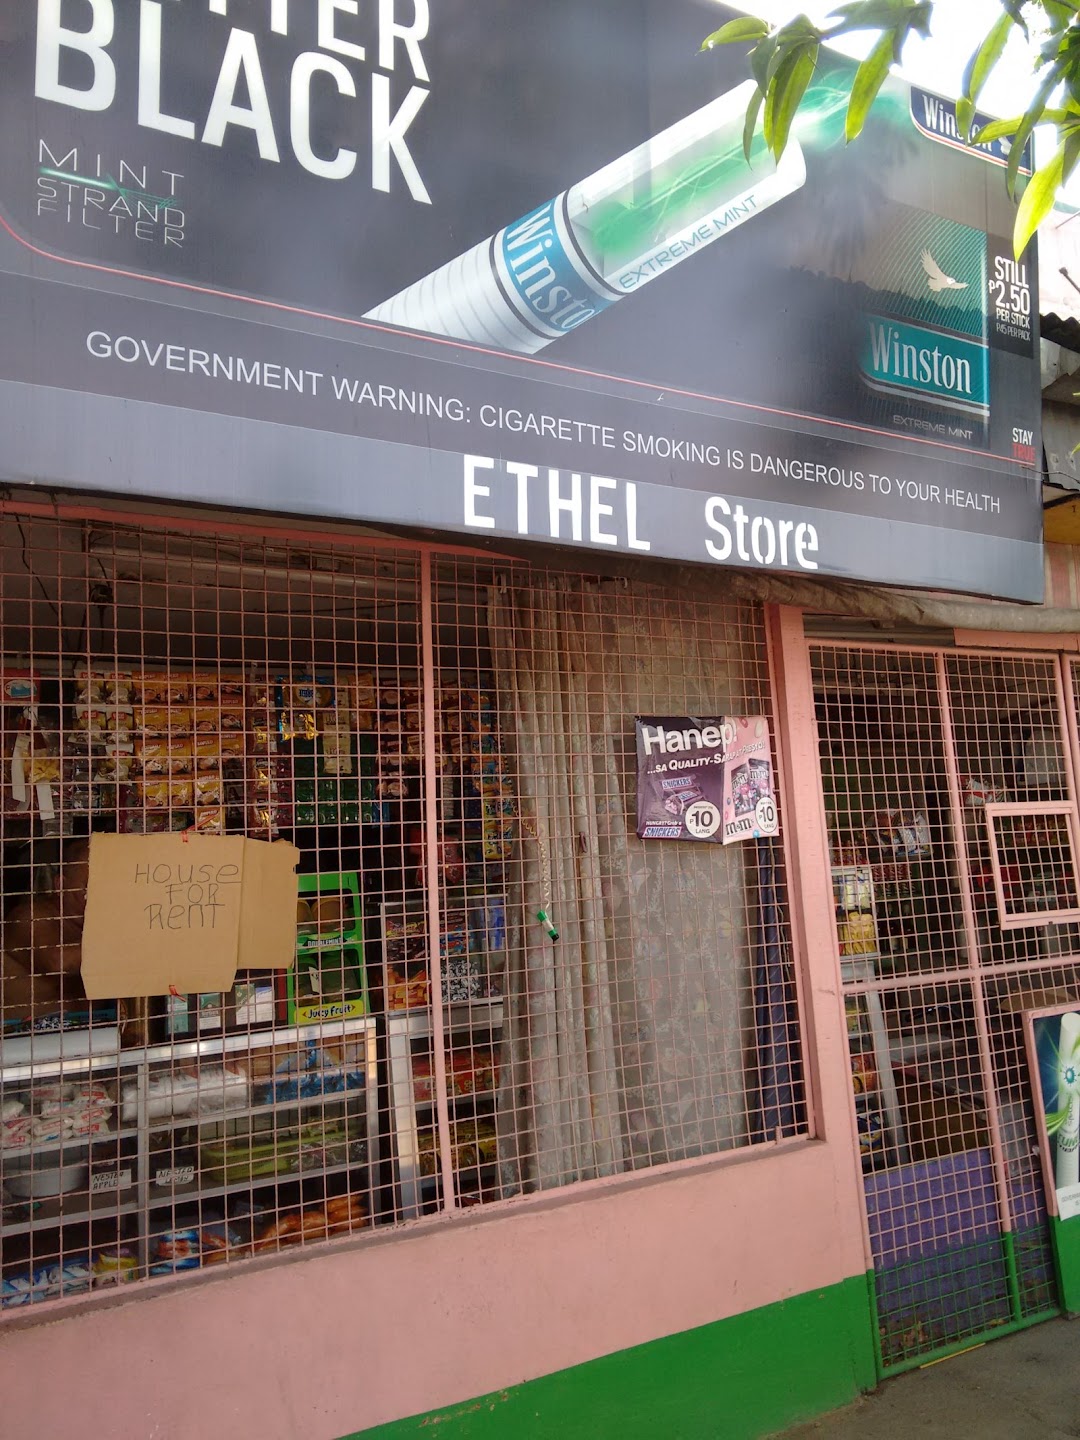 Ethel Store